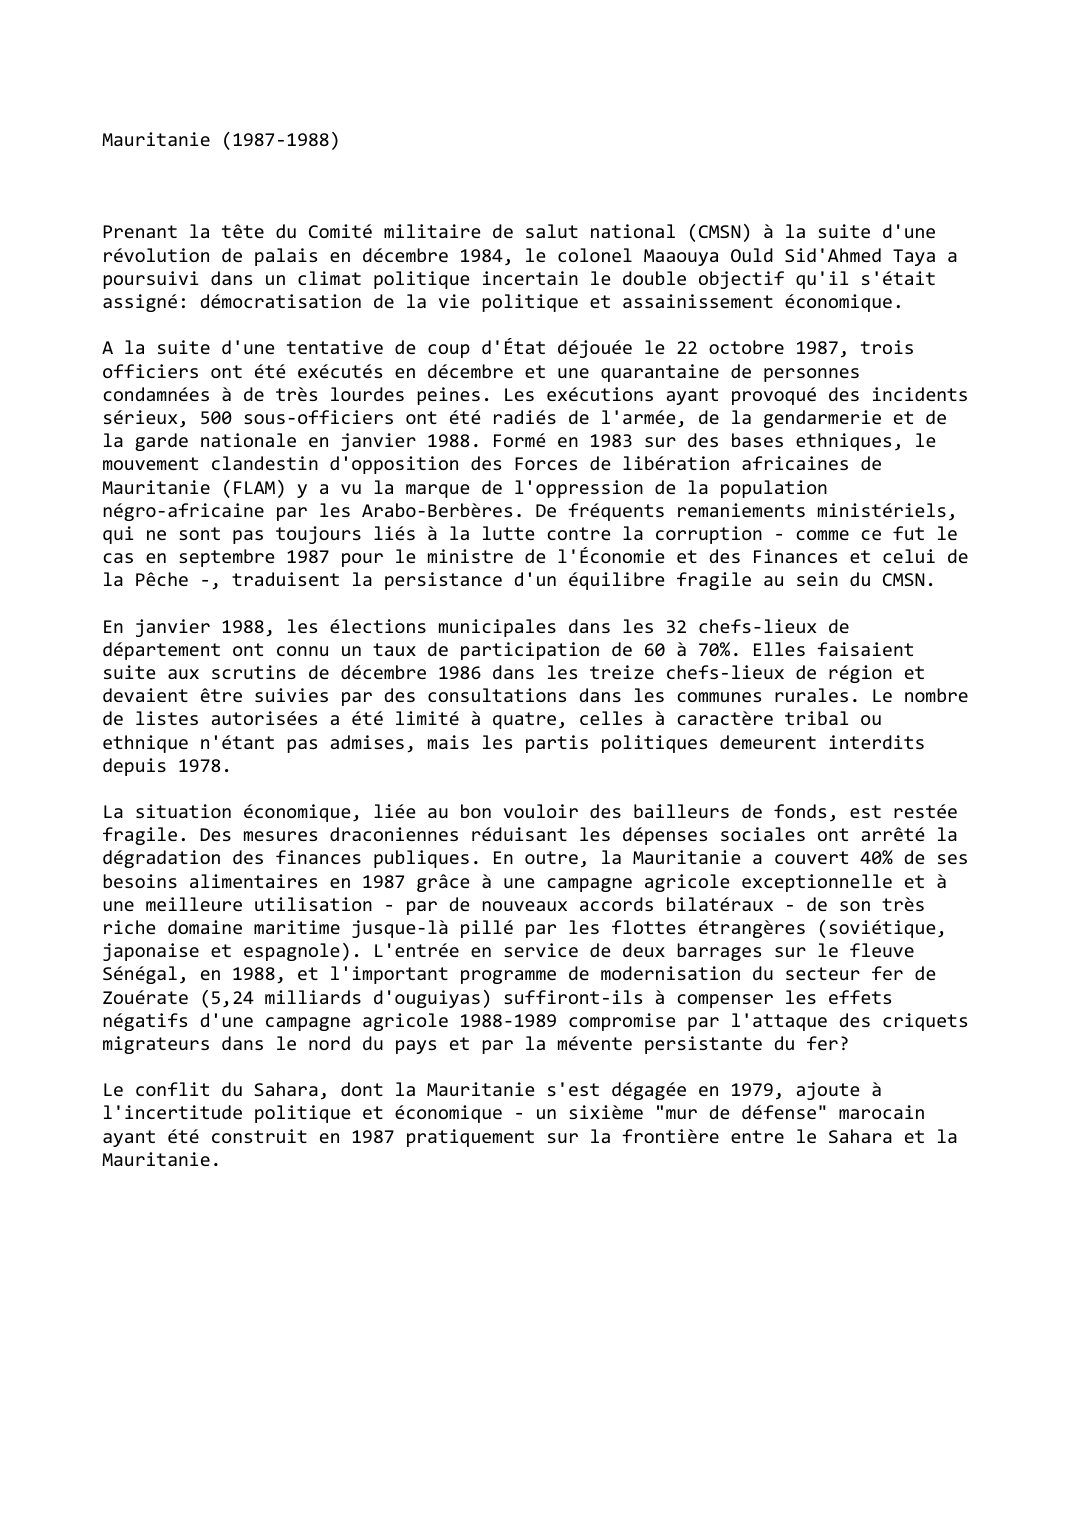 Prévisualisation du document Mauritanie (1987-1988)